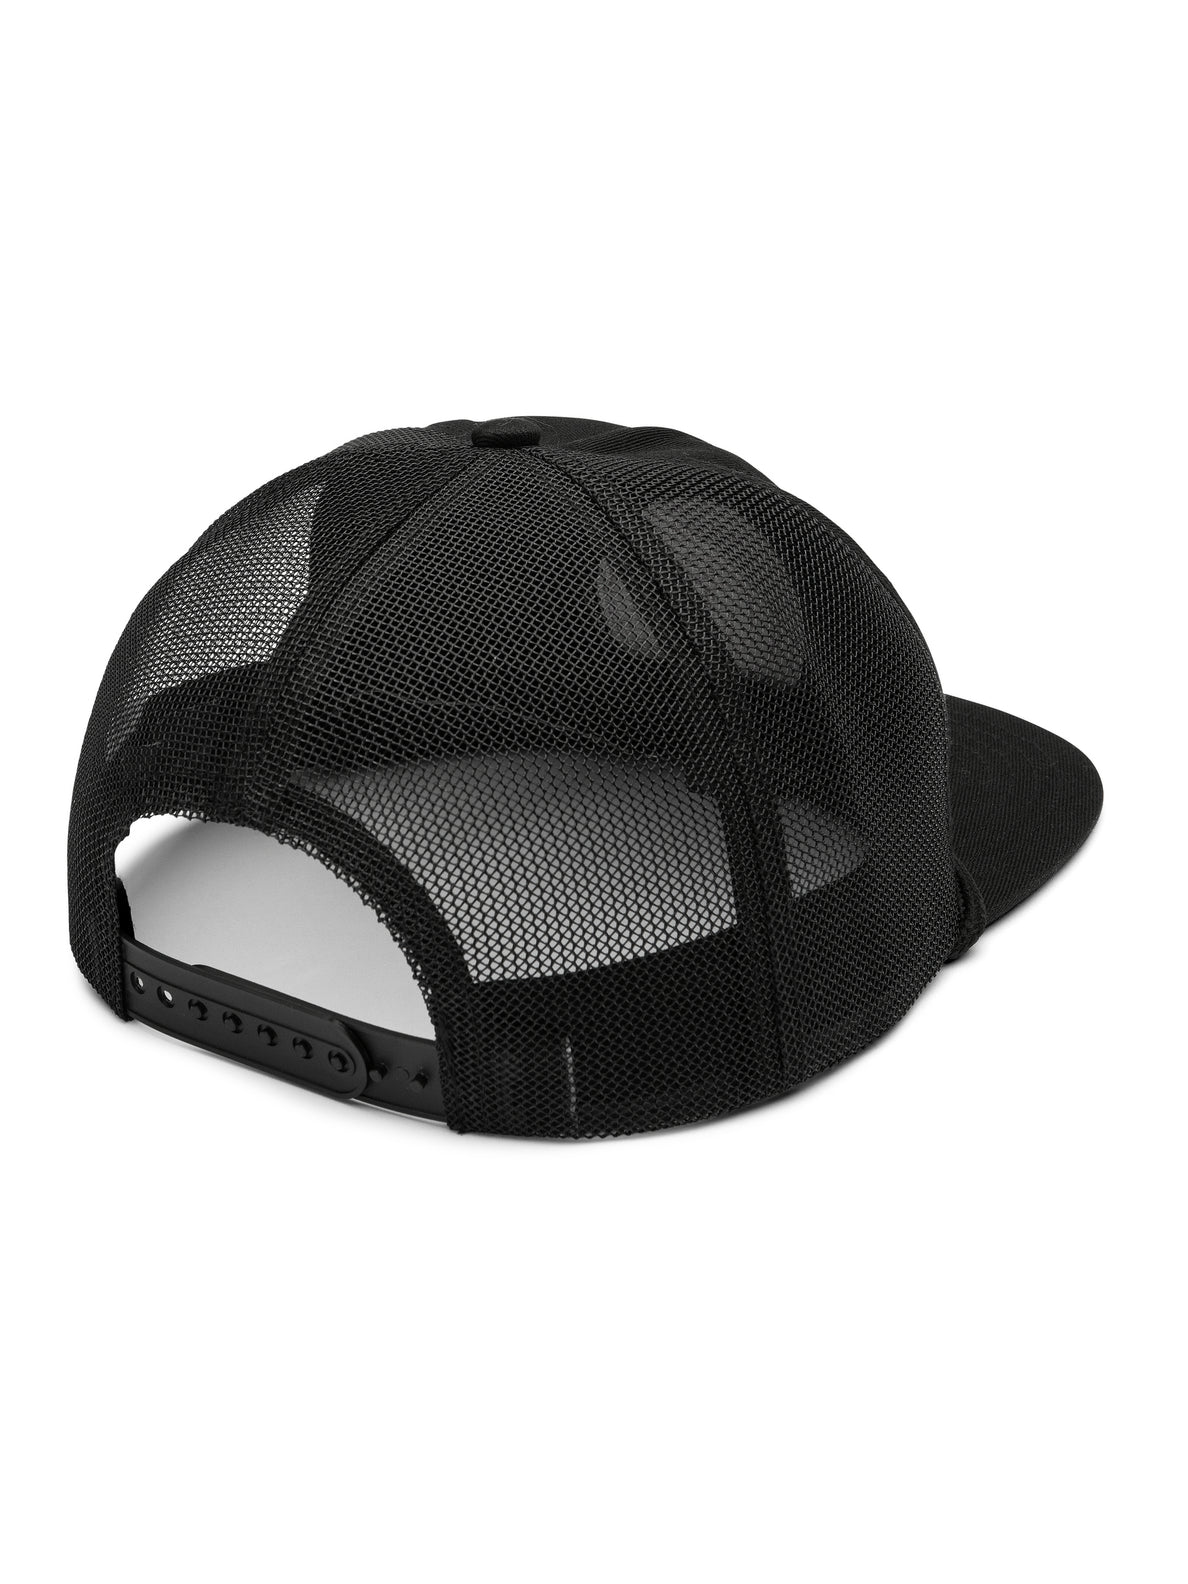 Fresh catch twill mesh trucker Hat Black